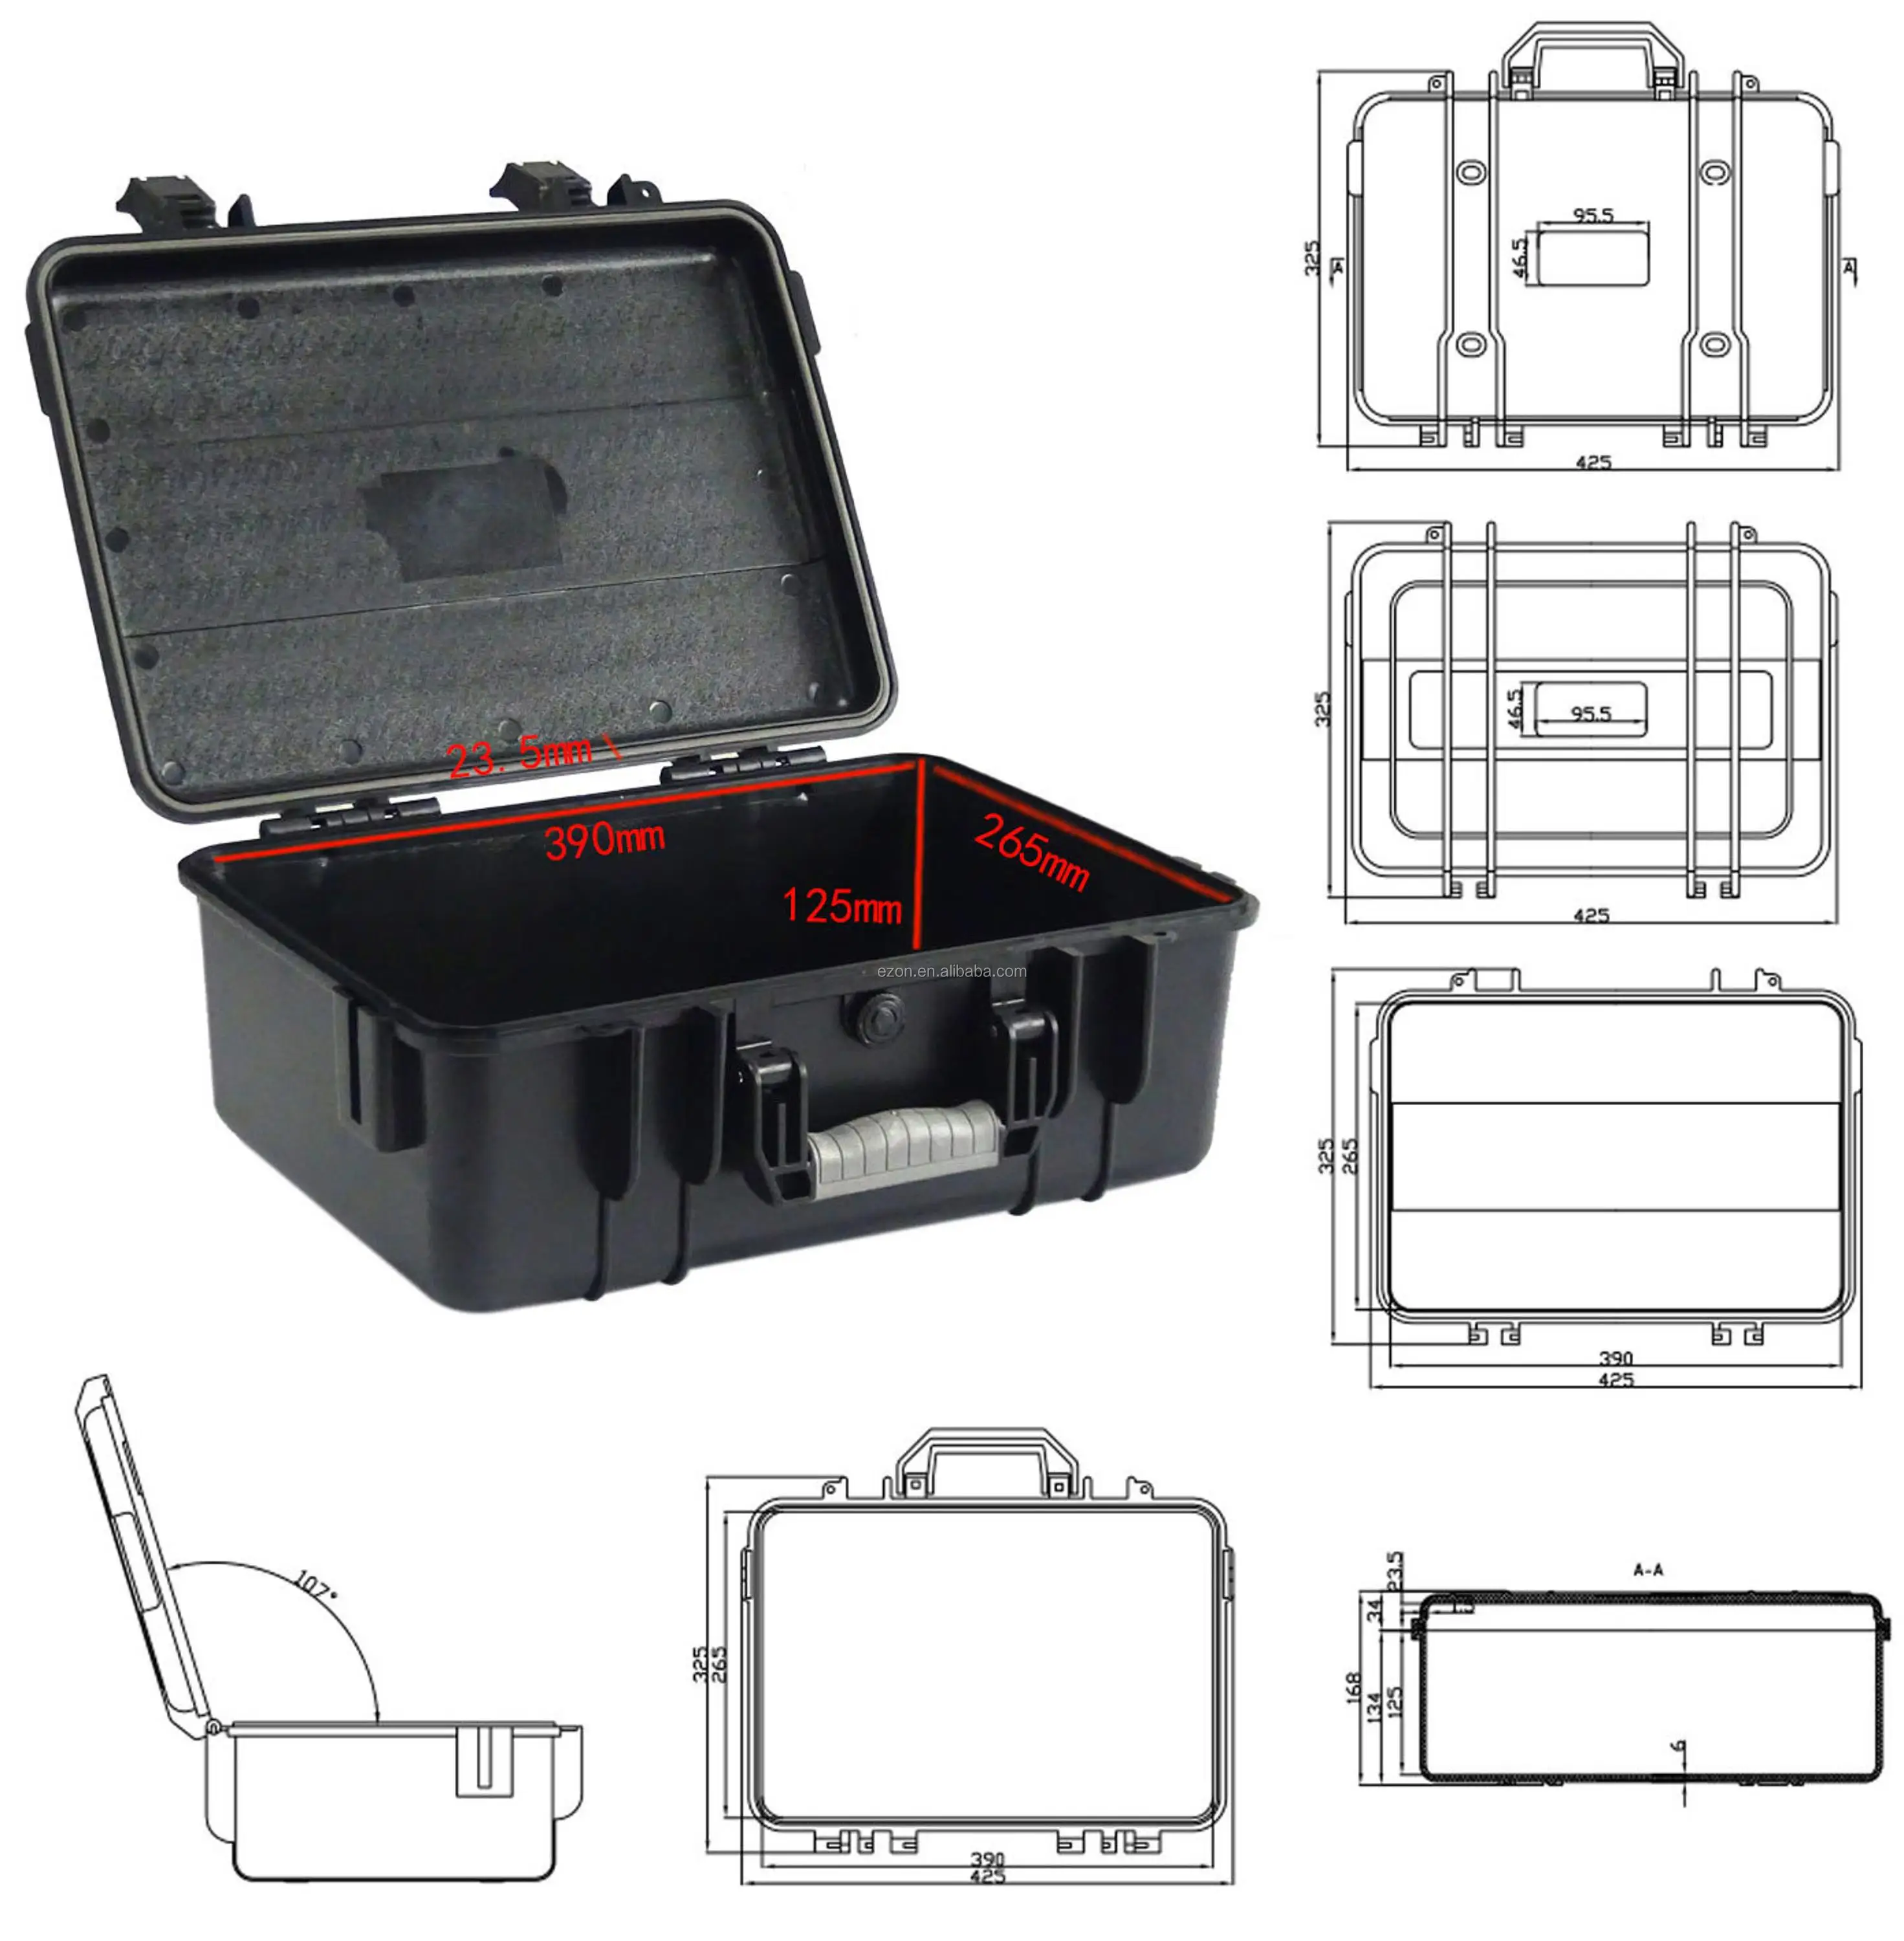 Multi-purpose tool case/Shockproof Customized EVA Carry hard Tool Case/Multi-Function Plastic Tools Case